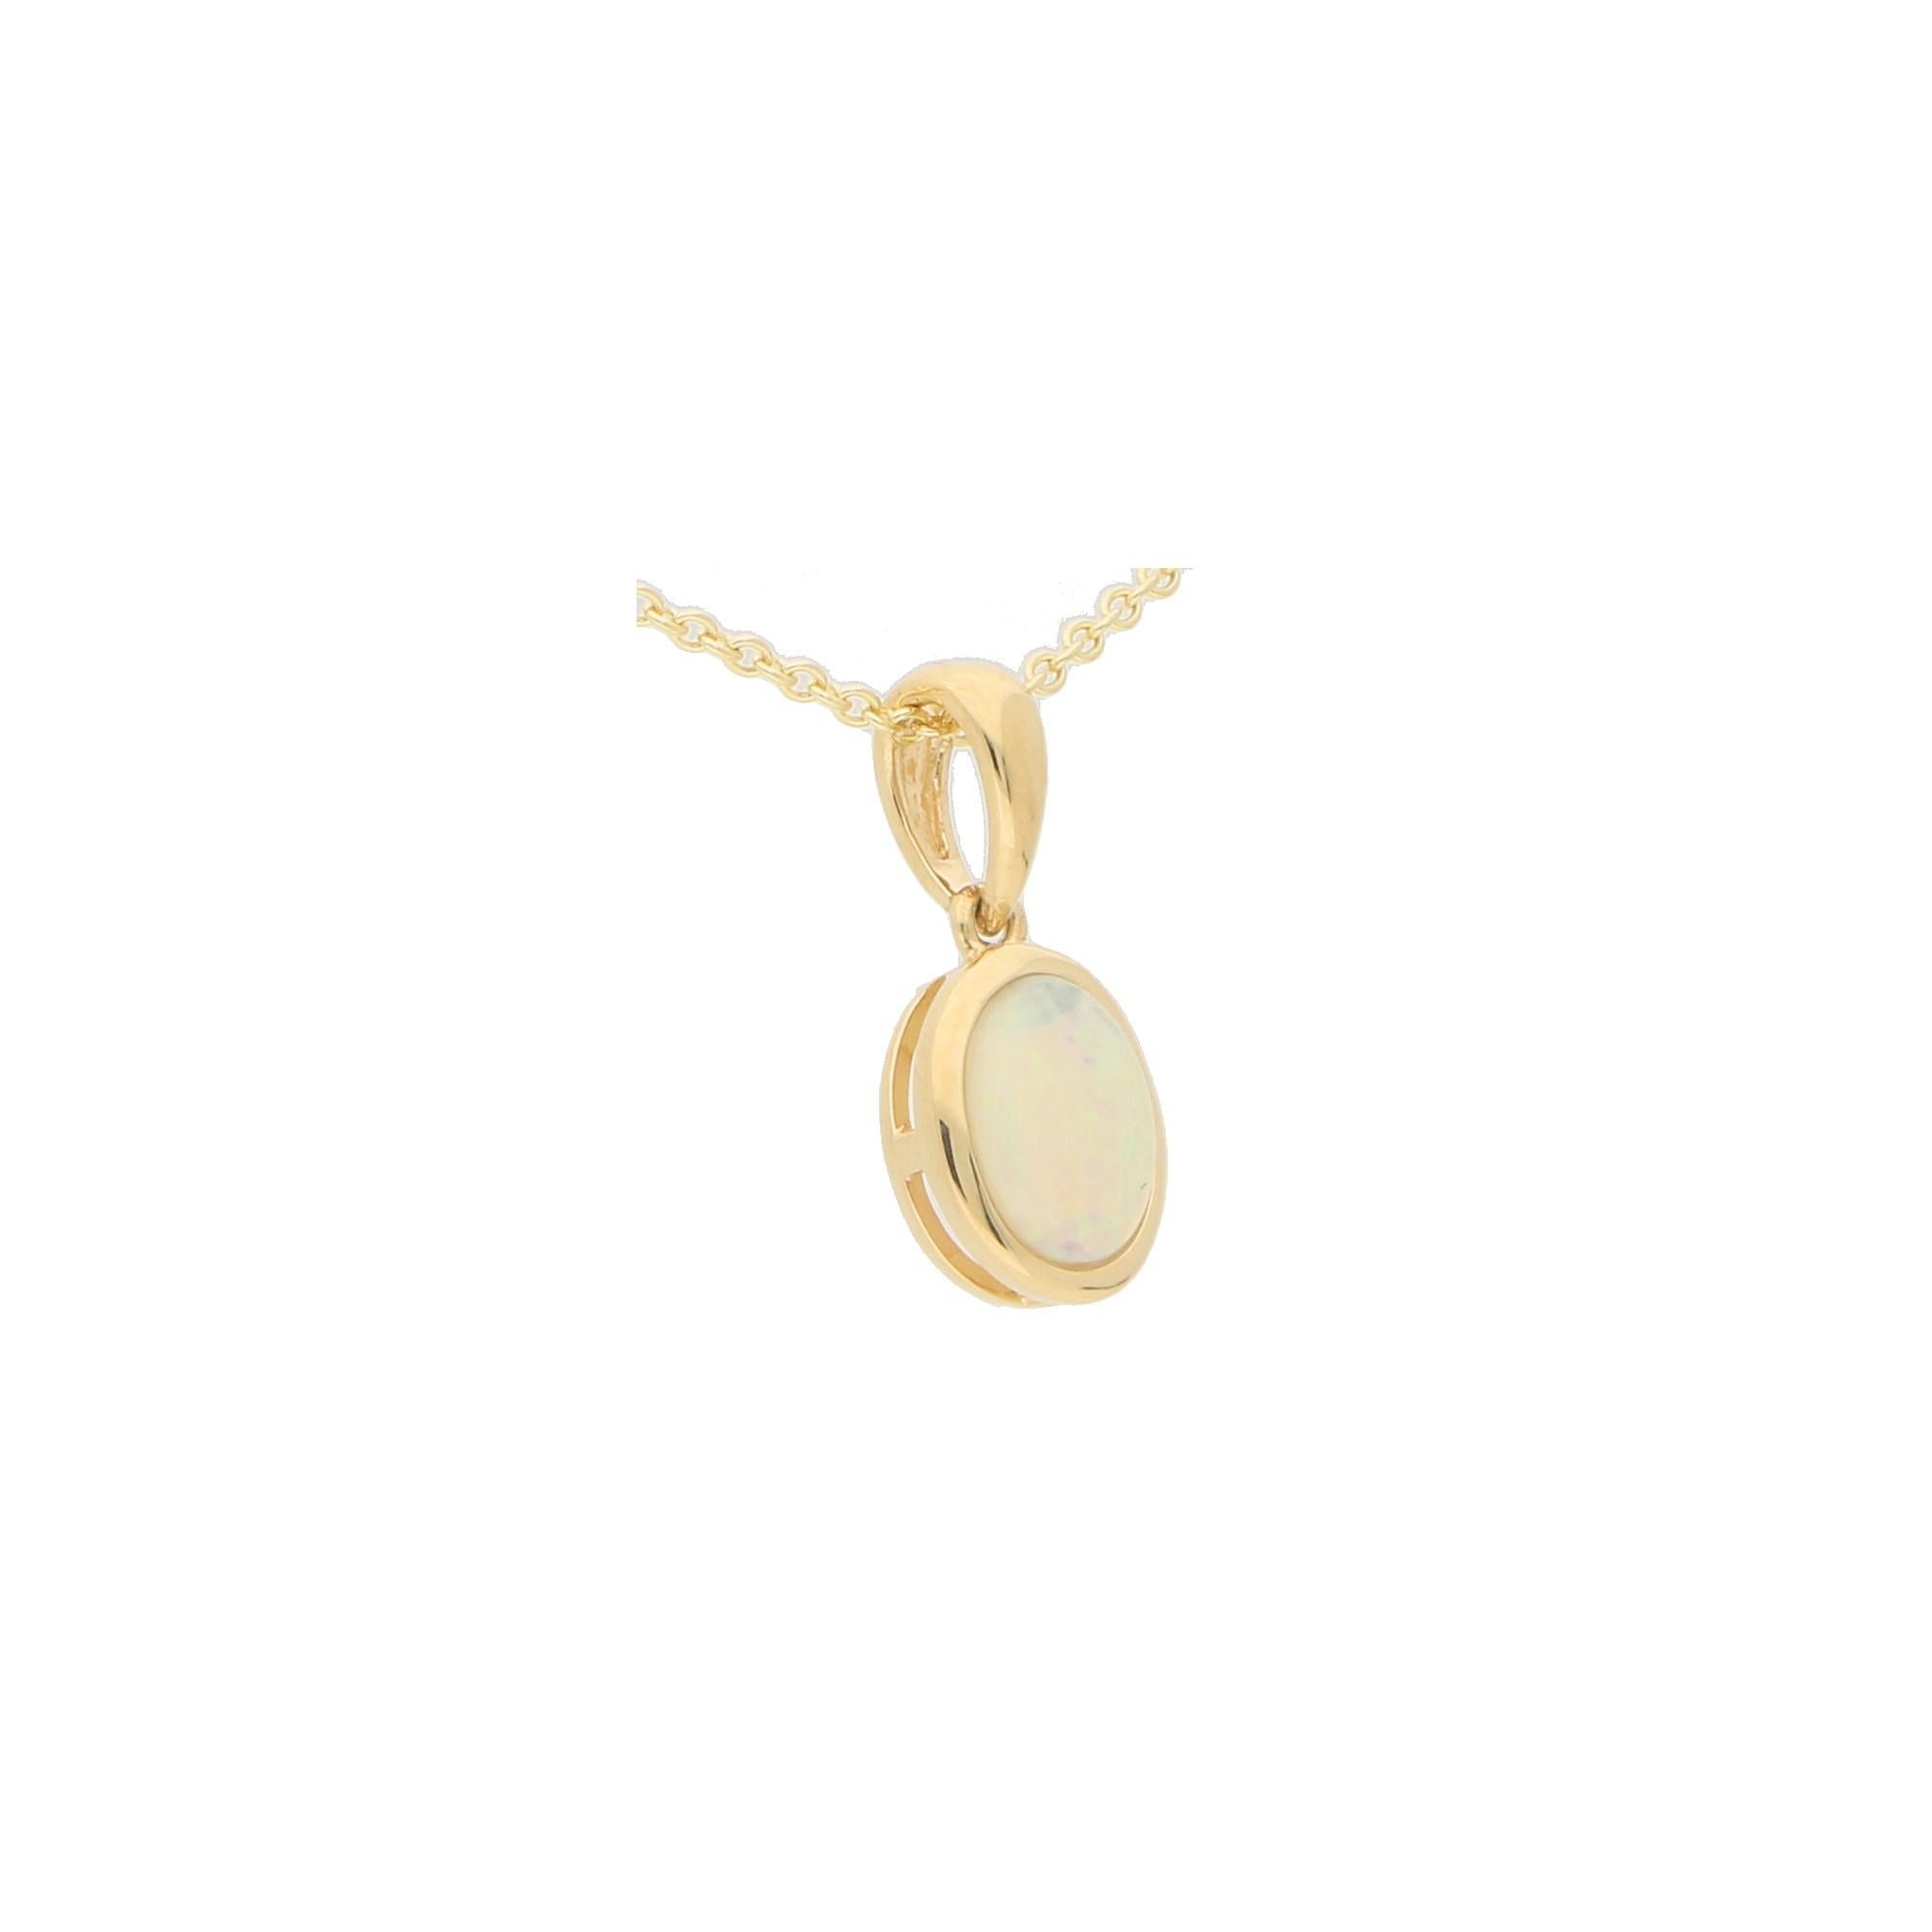 Oval Cut Opal Pendant Necklace Set in 18 Karat Yellow Gold